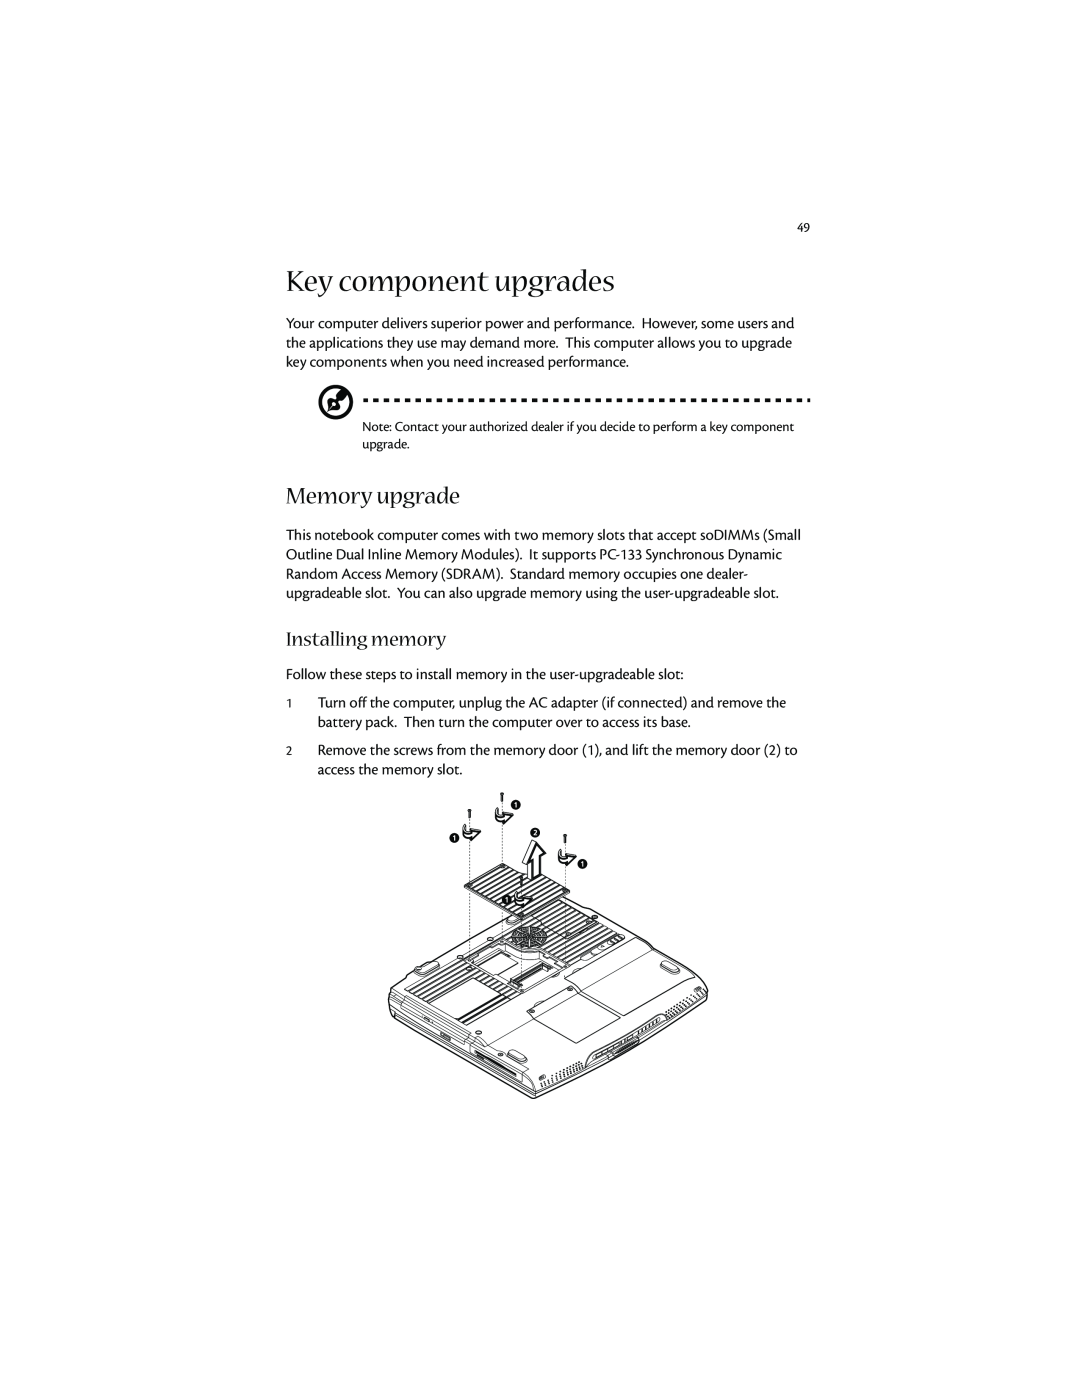 Acer 1400 manual Key component upgrades, Memory upgrade, Installing memory 